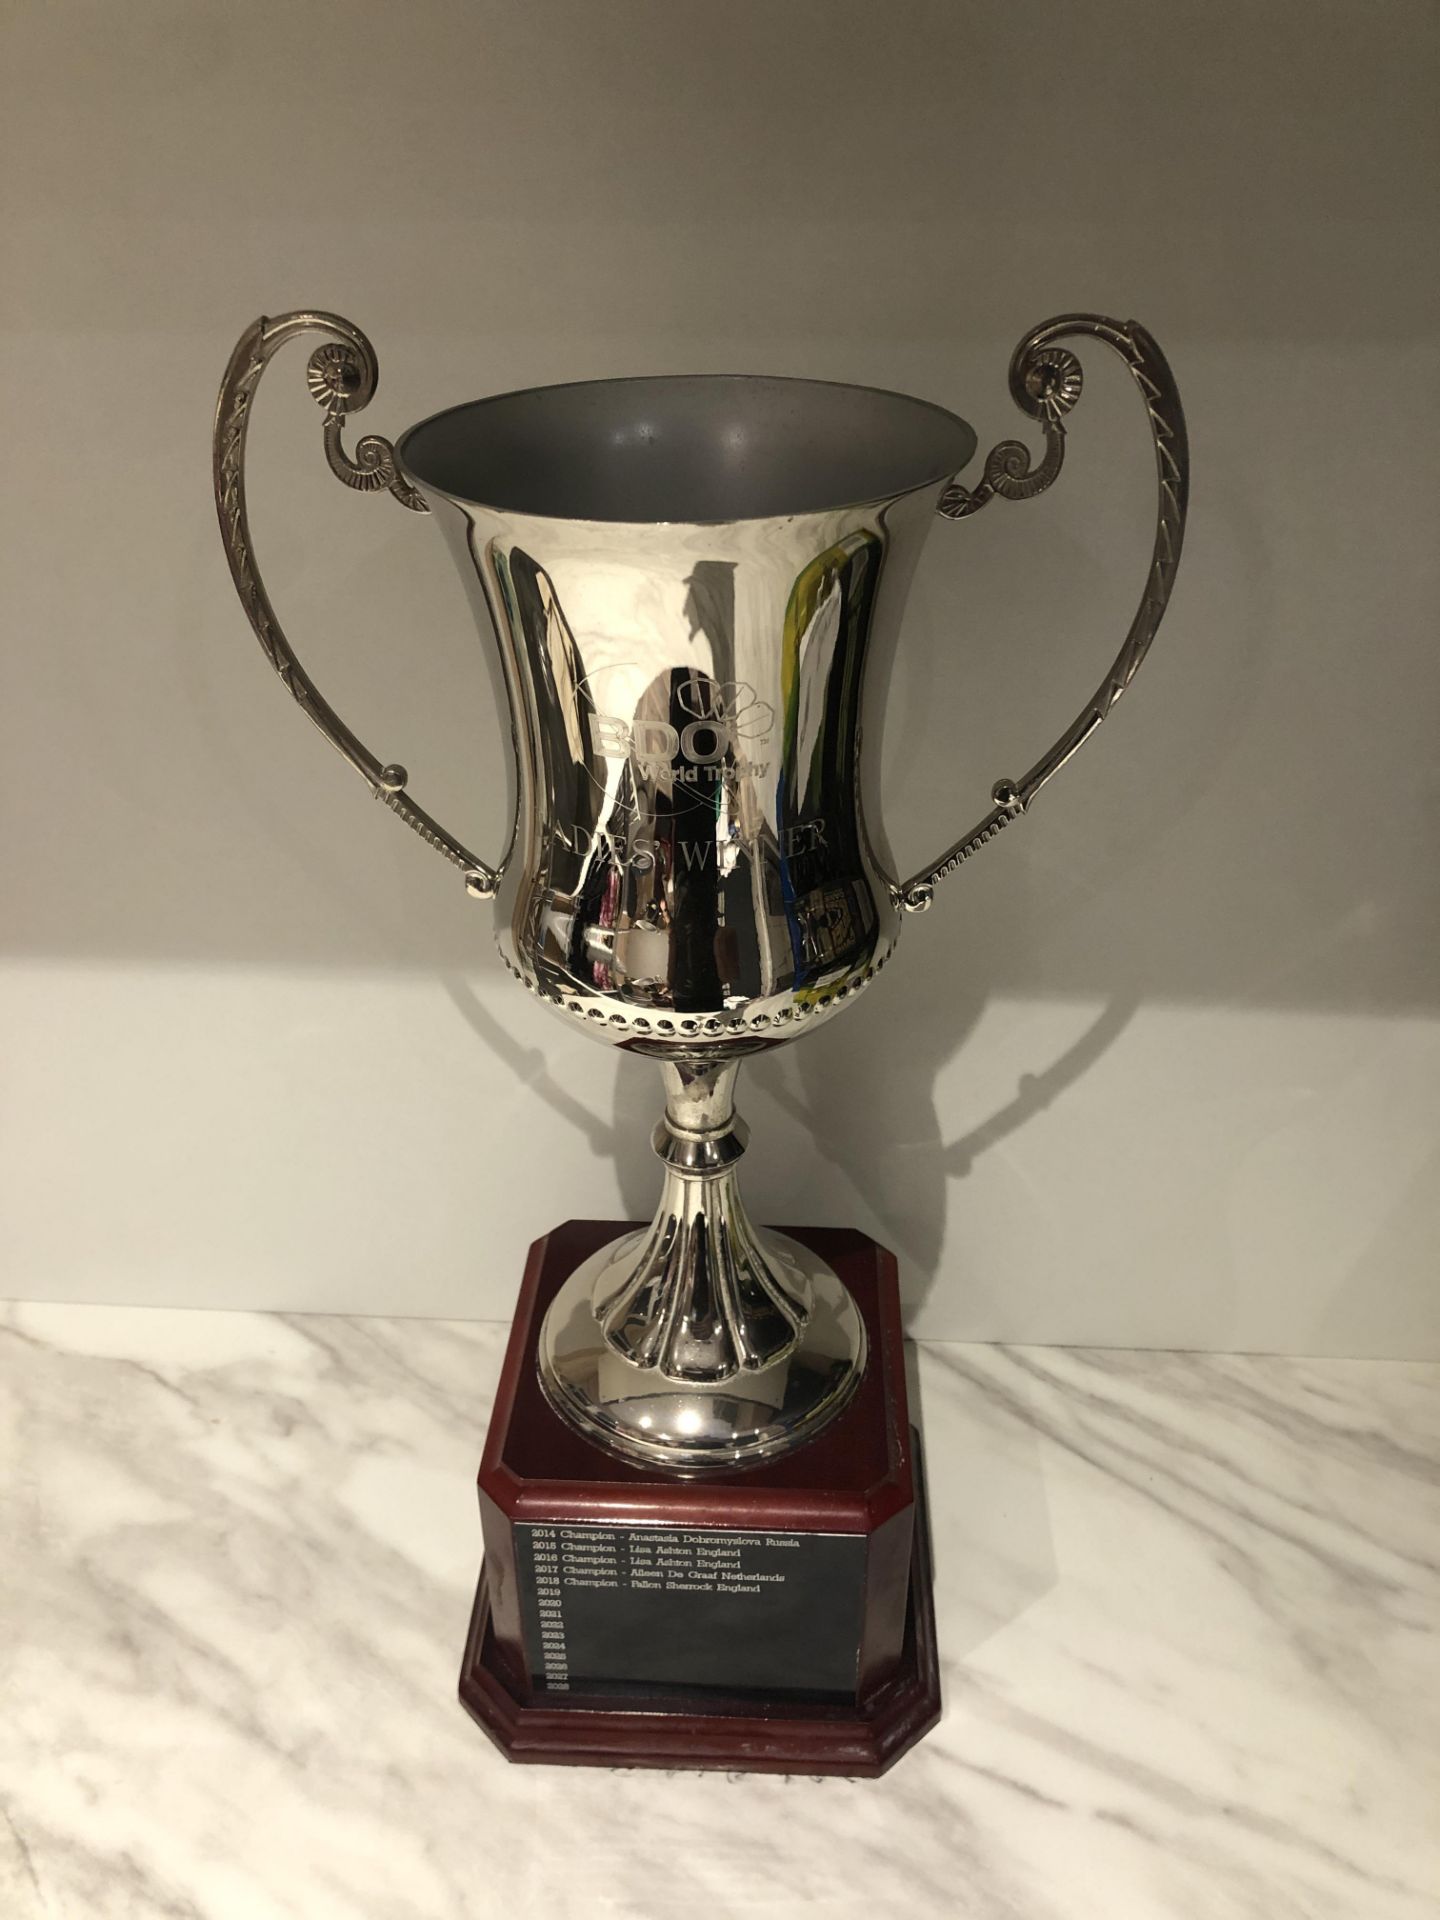 The Women's BDO World Darts Trophy